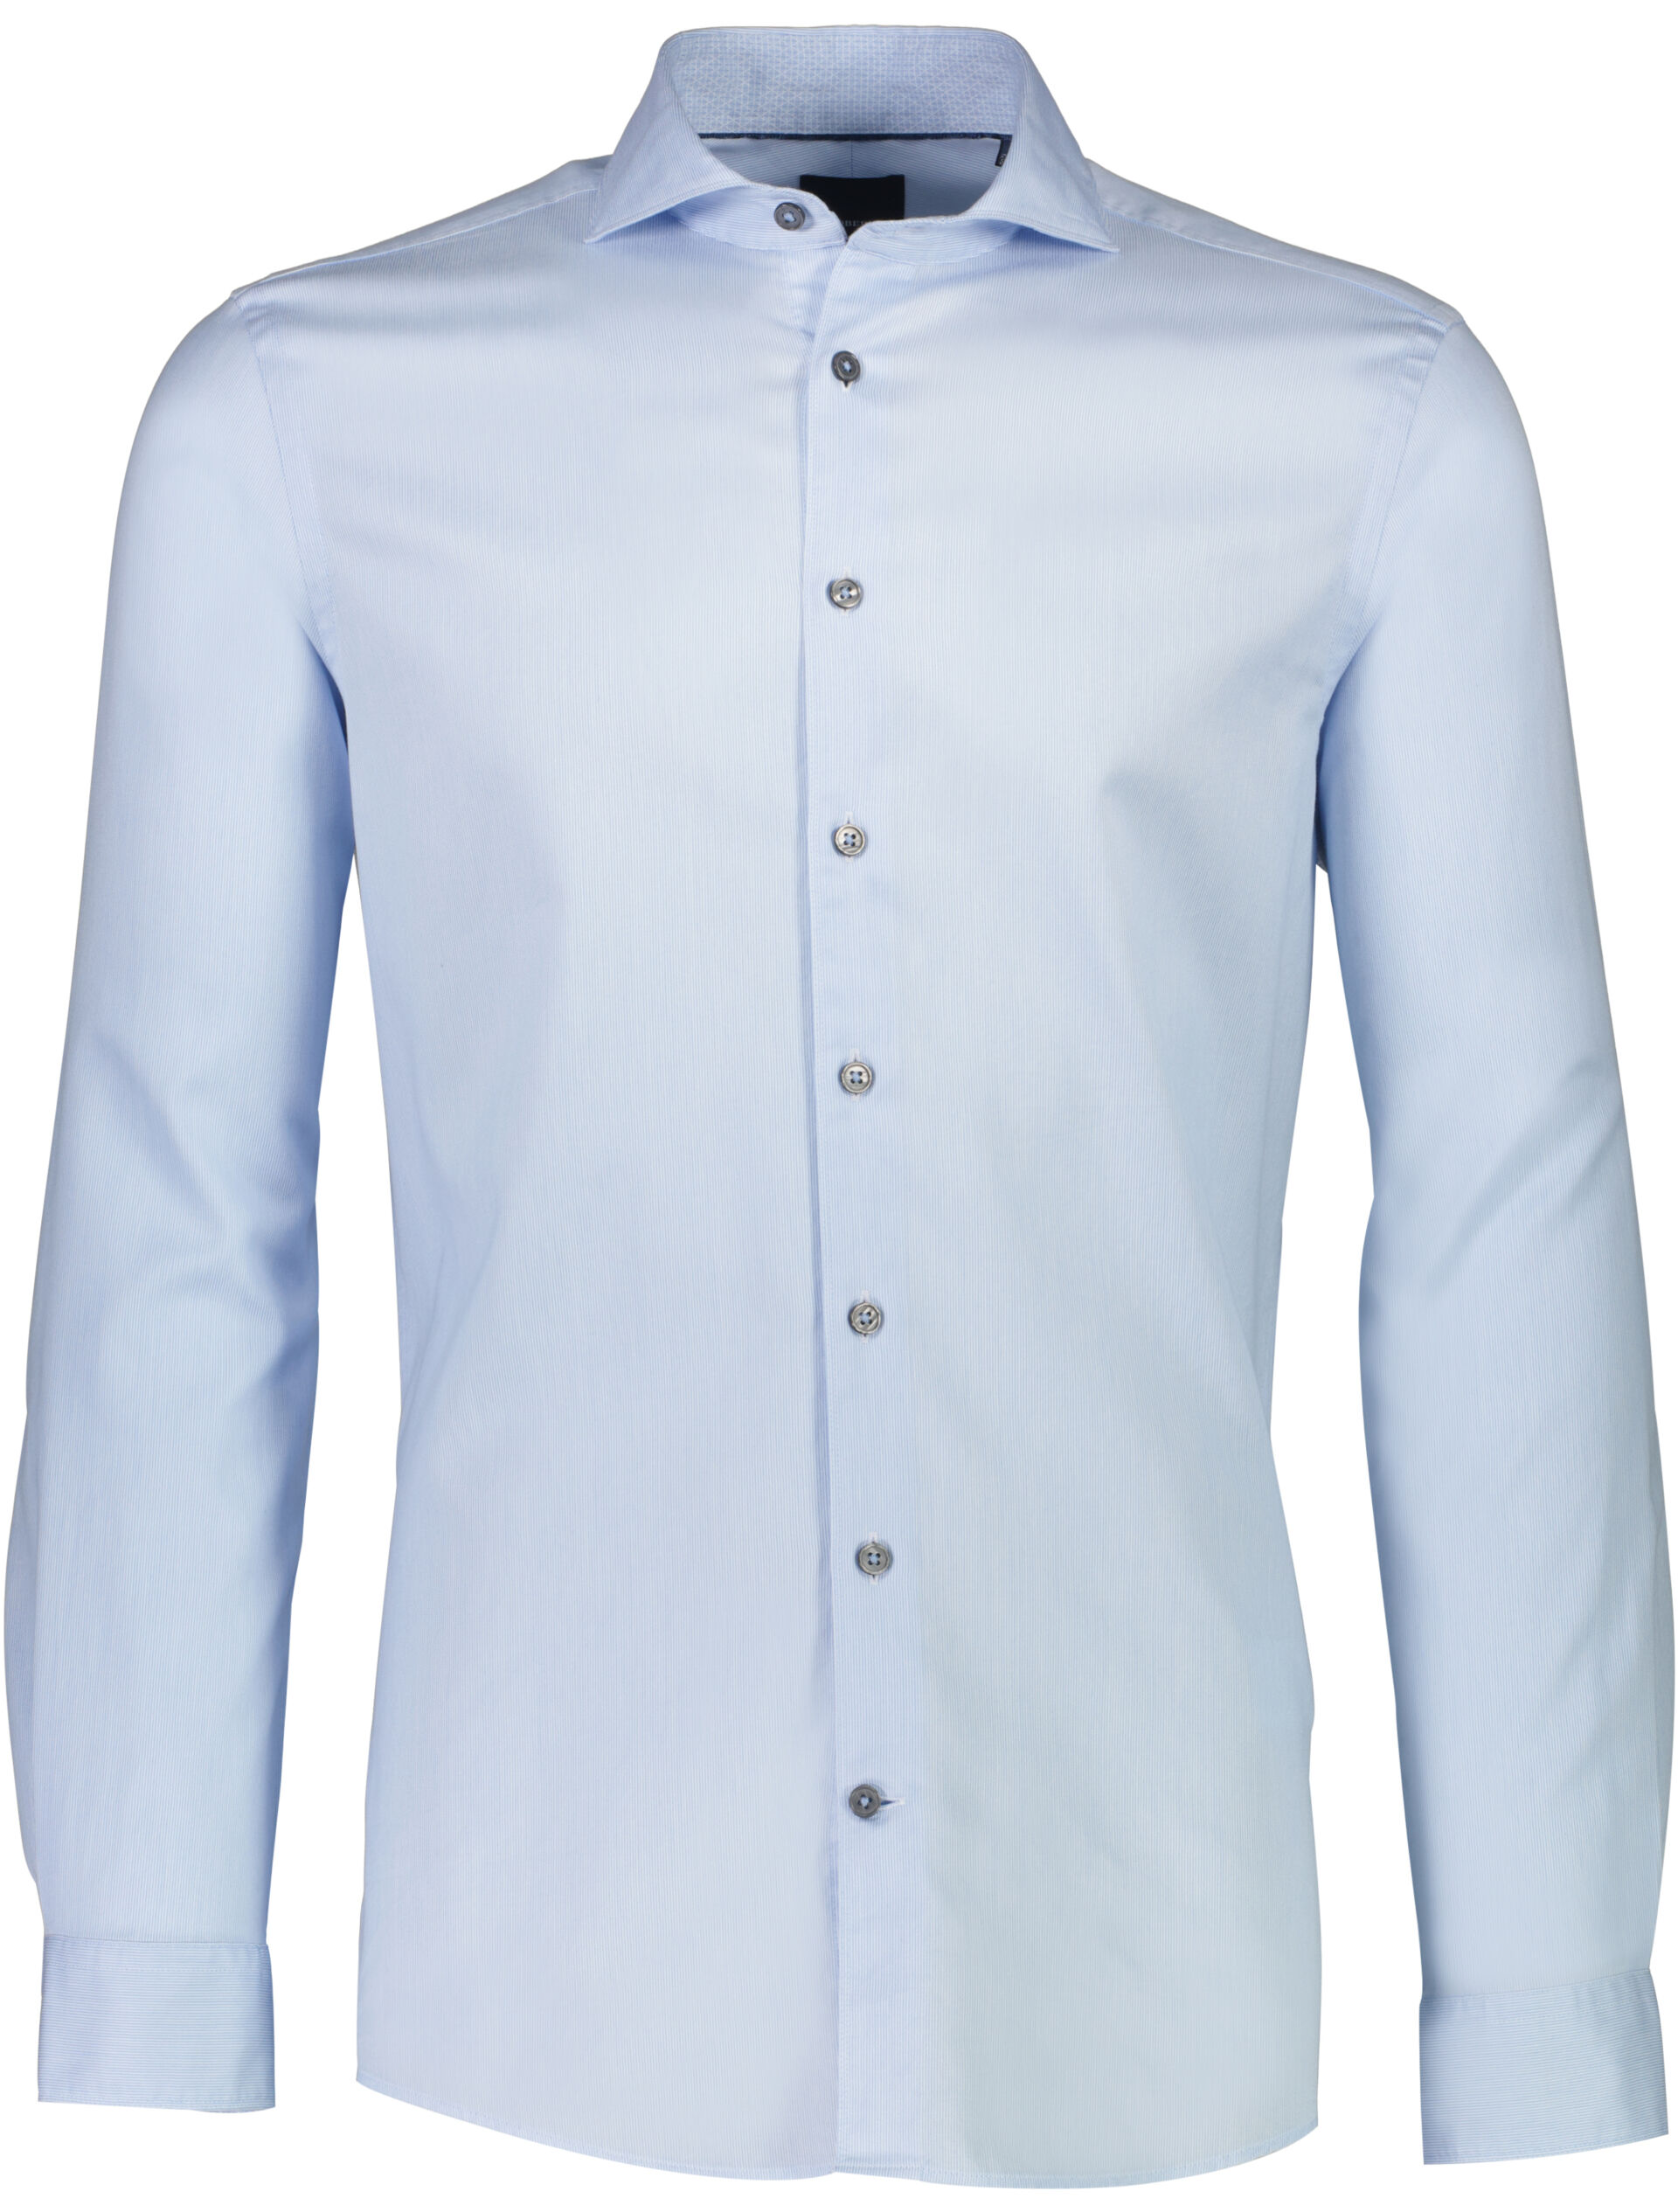 1927 Business casual shirt 30-247240